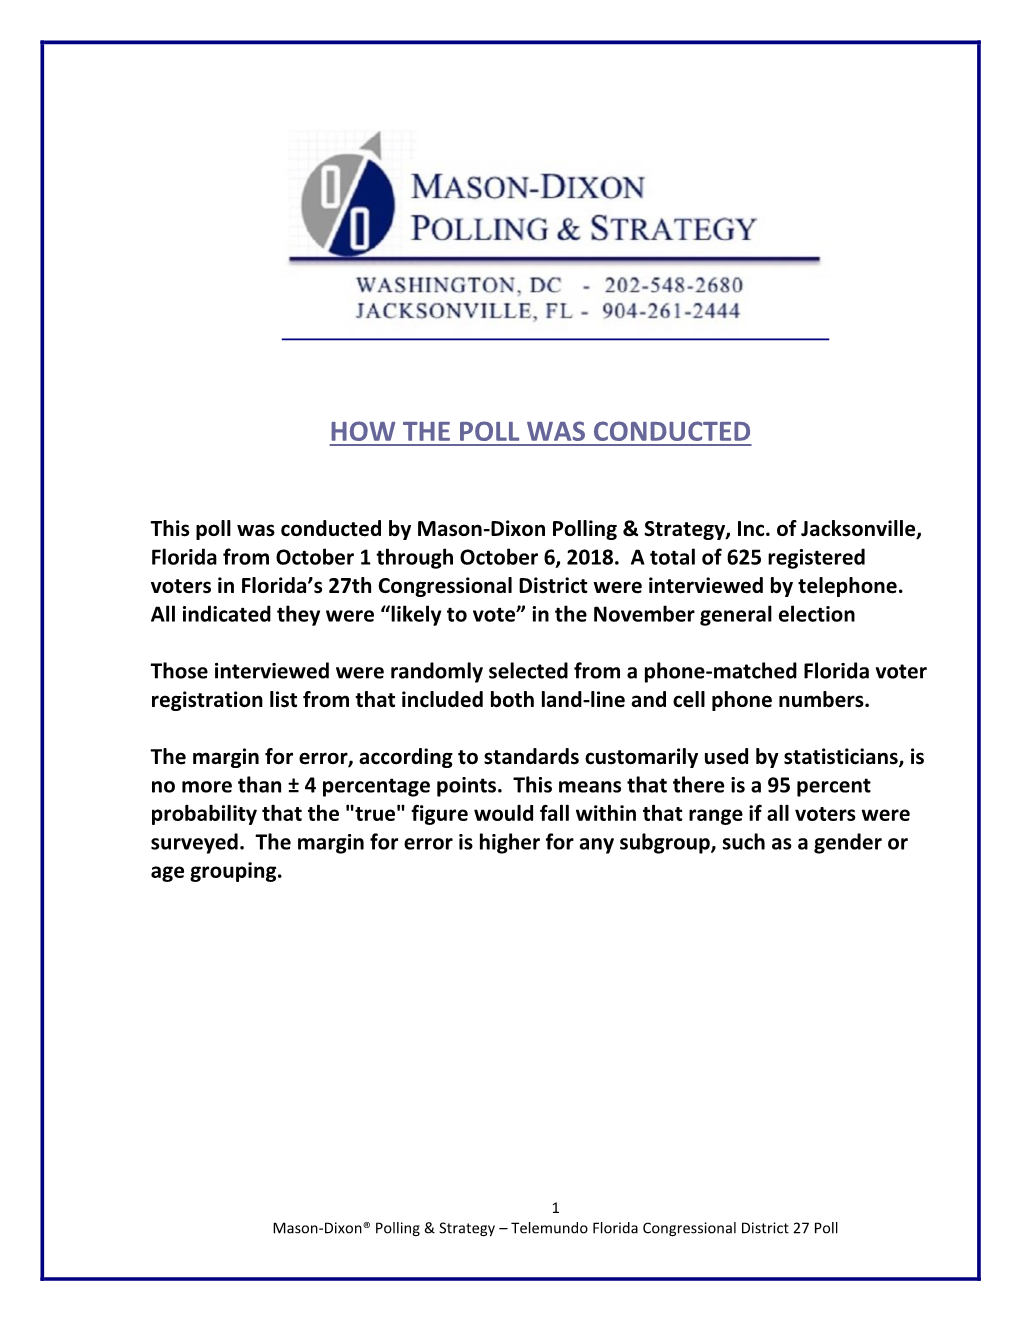 Mason-Dixon Polling & Strategy, Inc